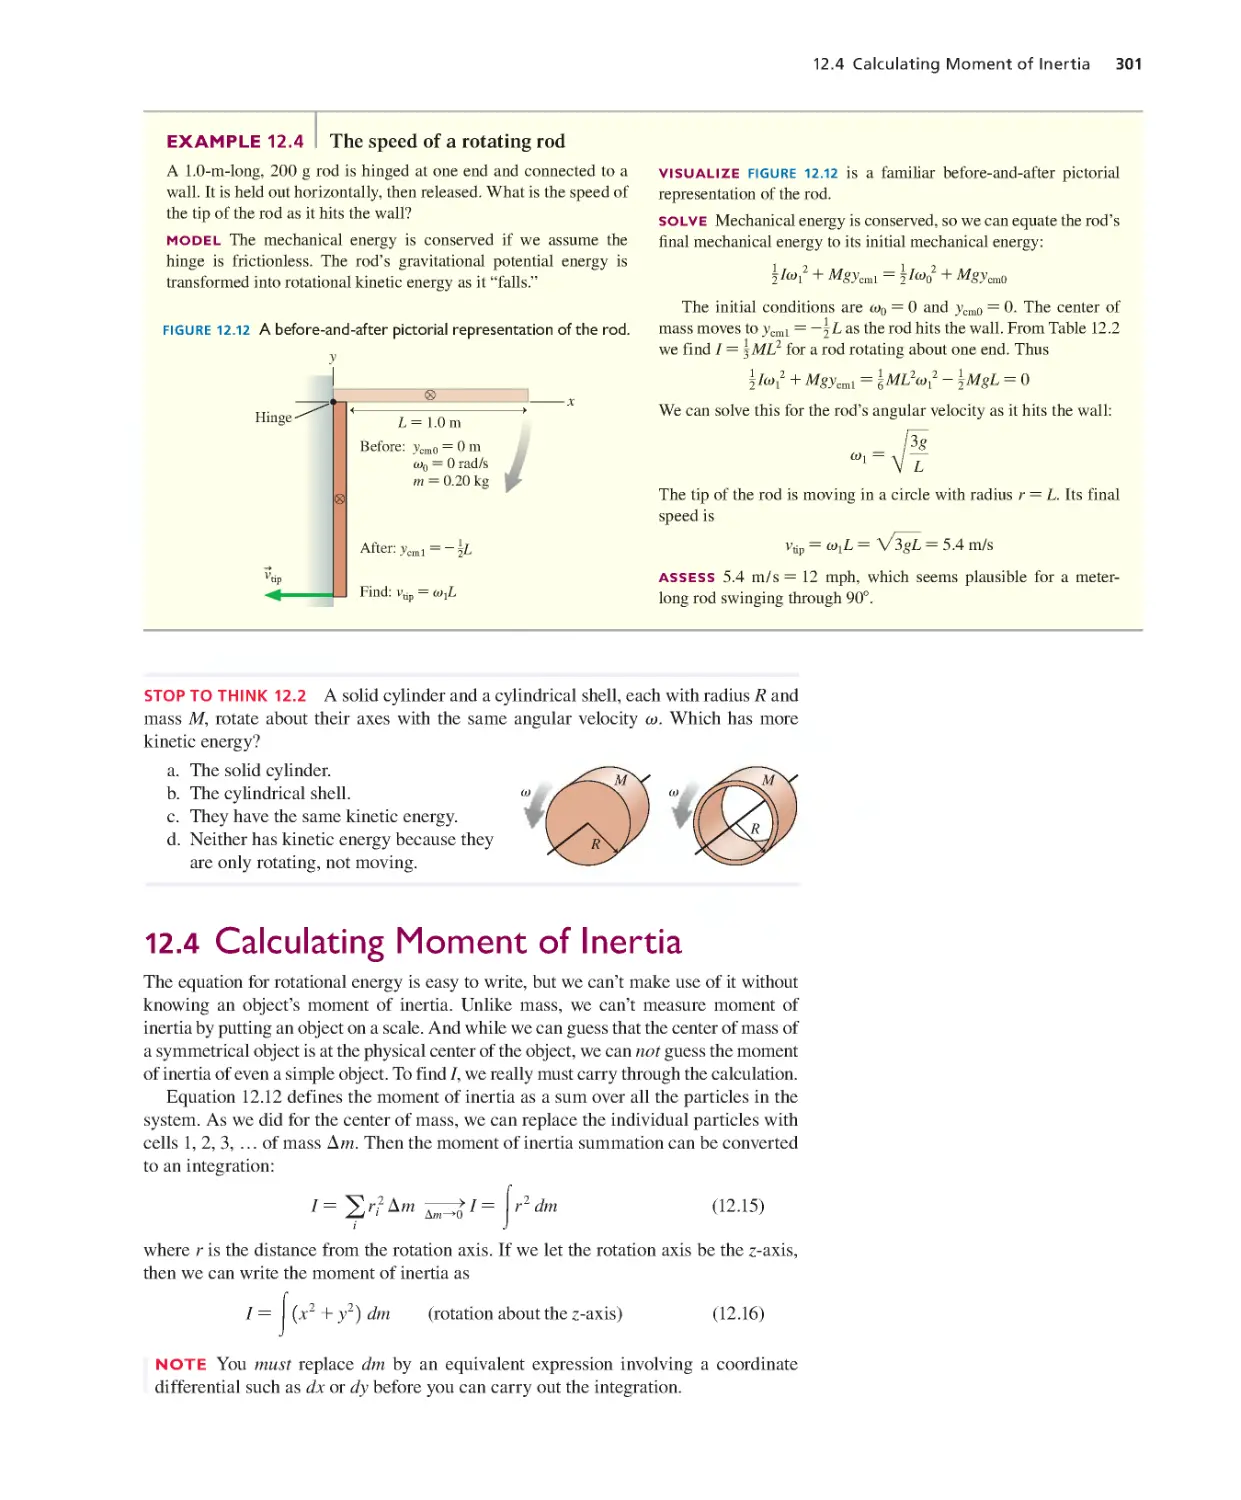 12.4. Calculating Moment of Inertia